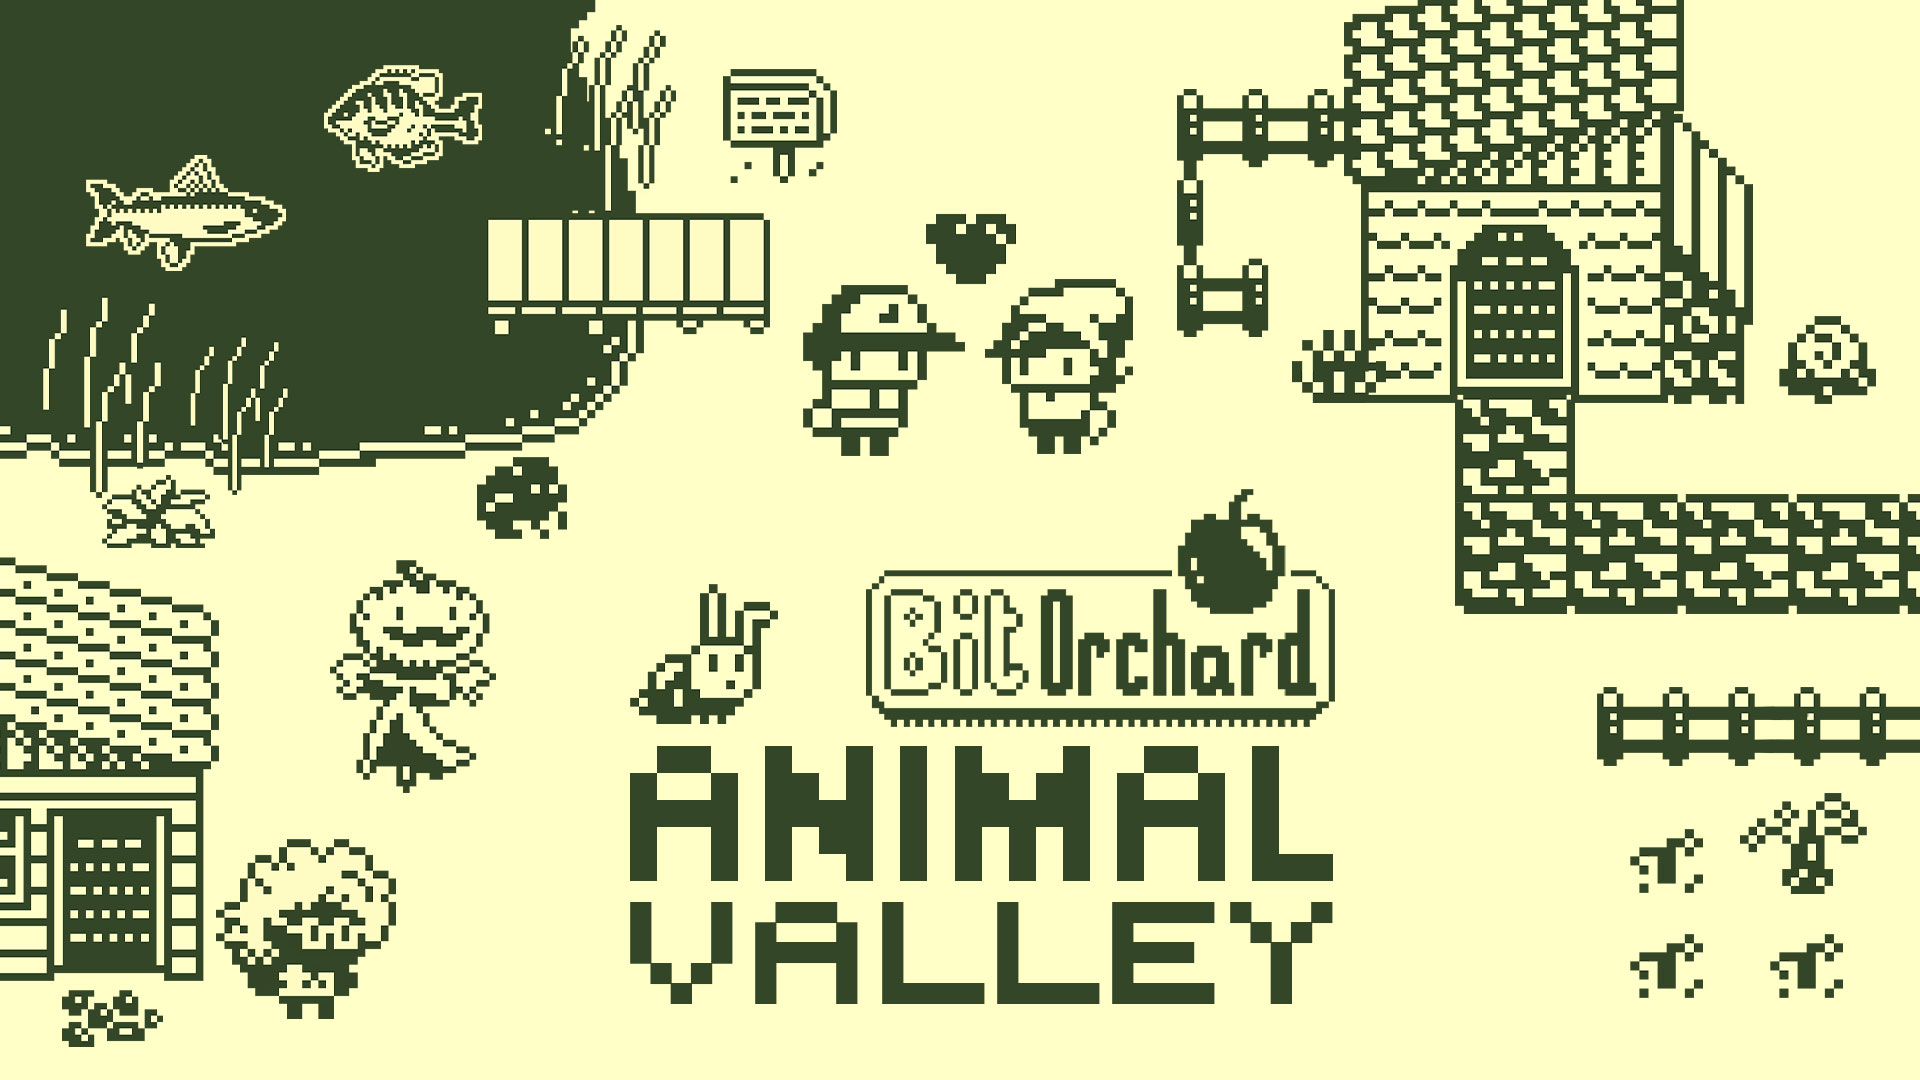 Bit Orchard: Animal Valley